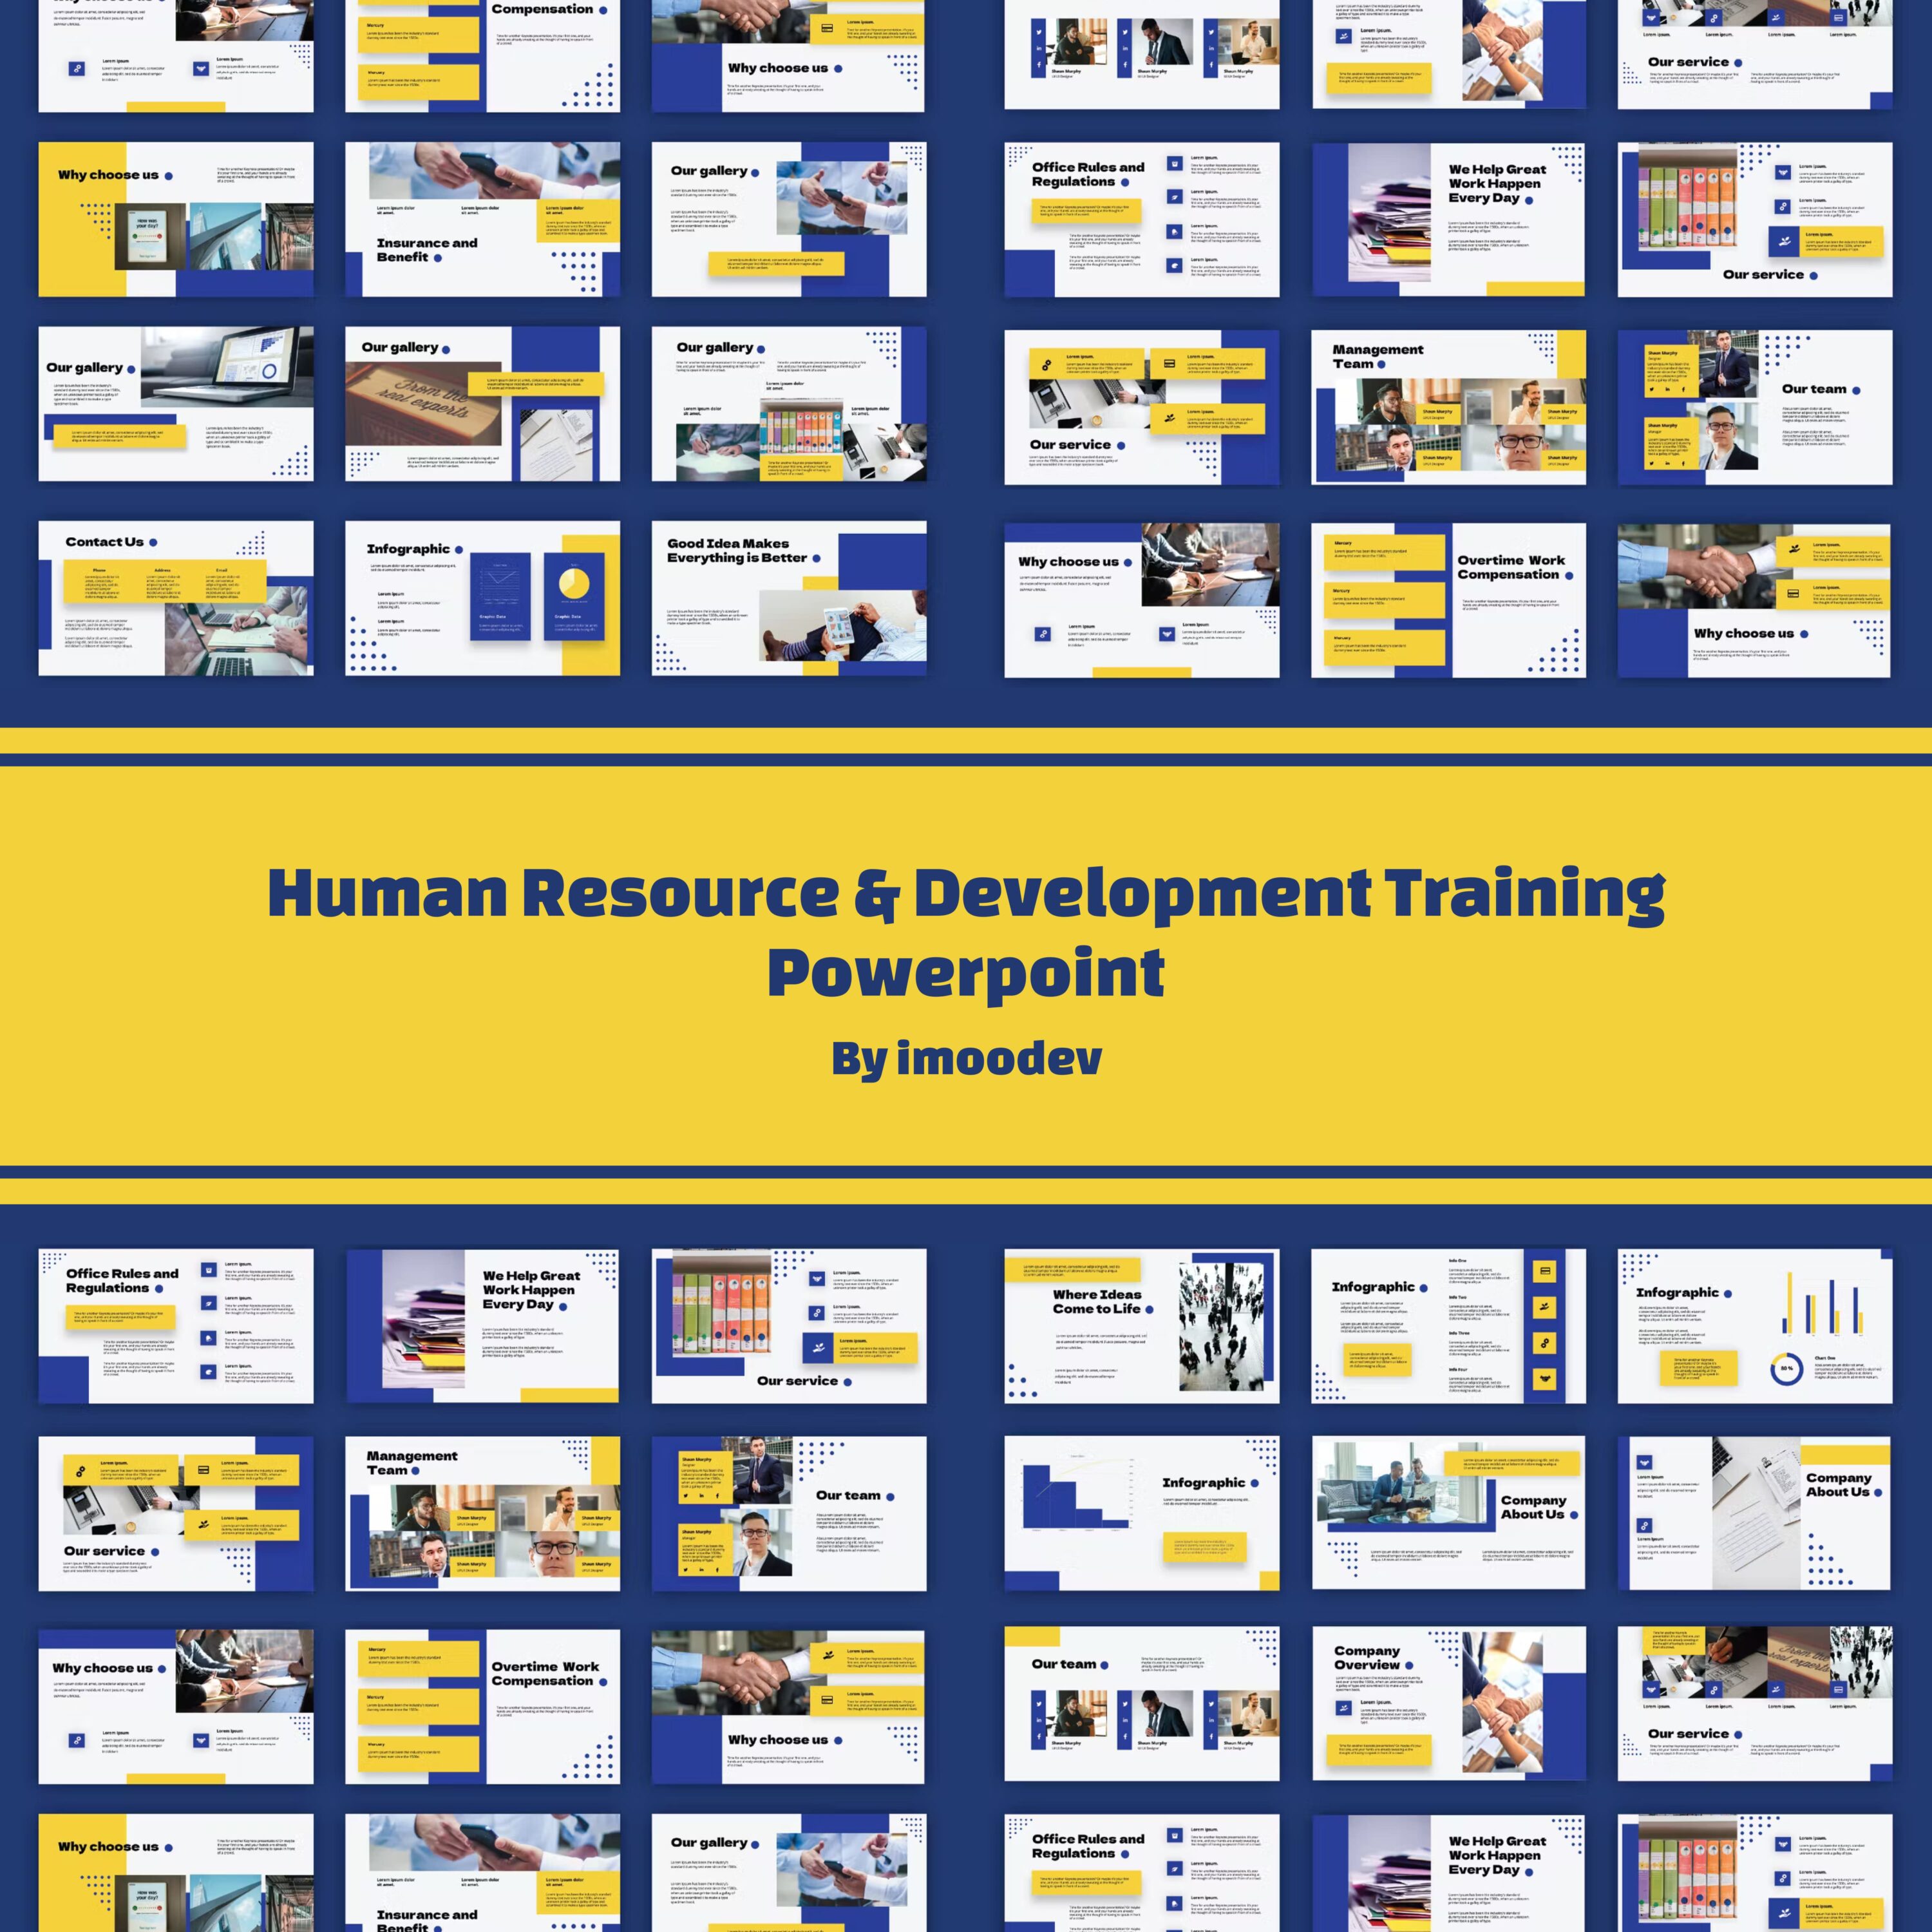 Human Resource & Development Training Powerpoint.